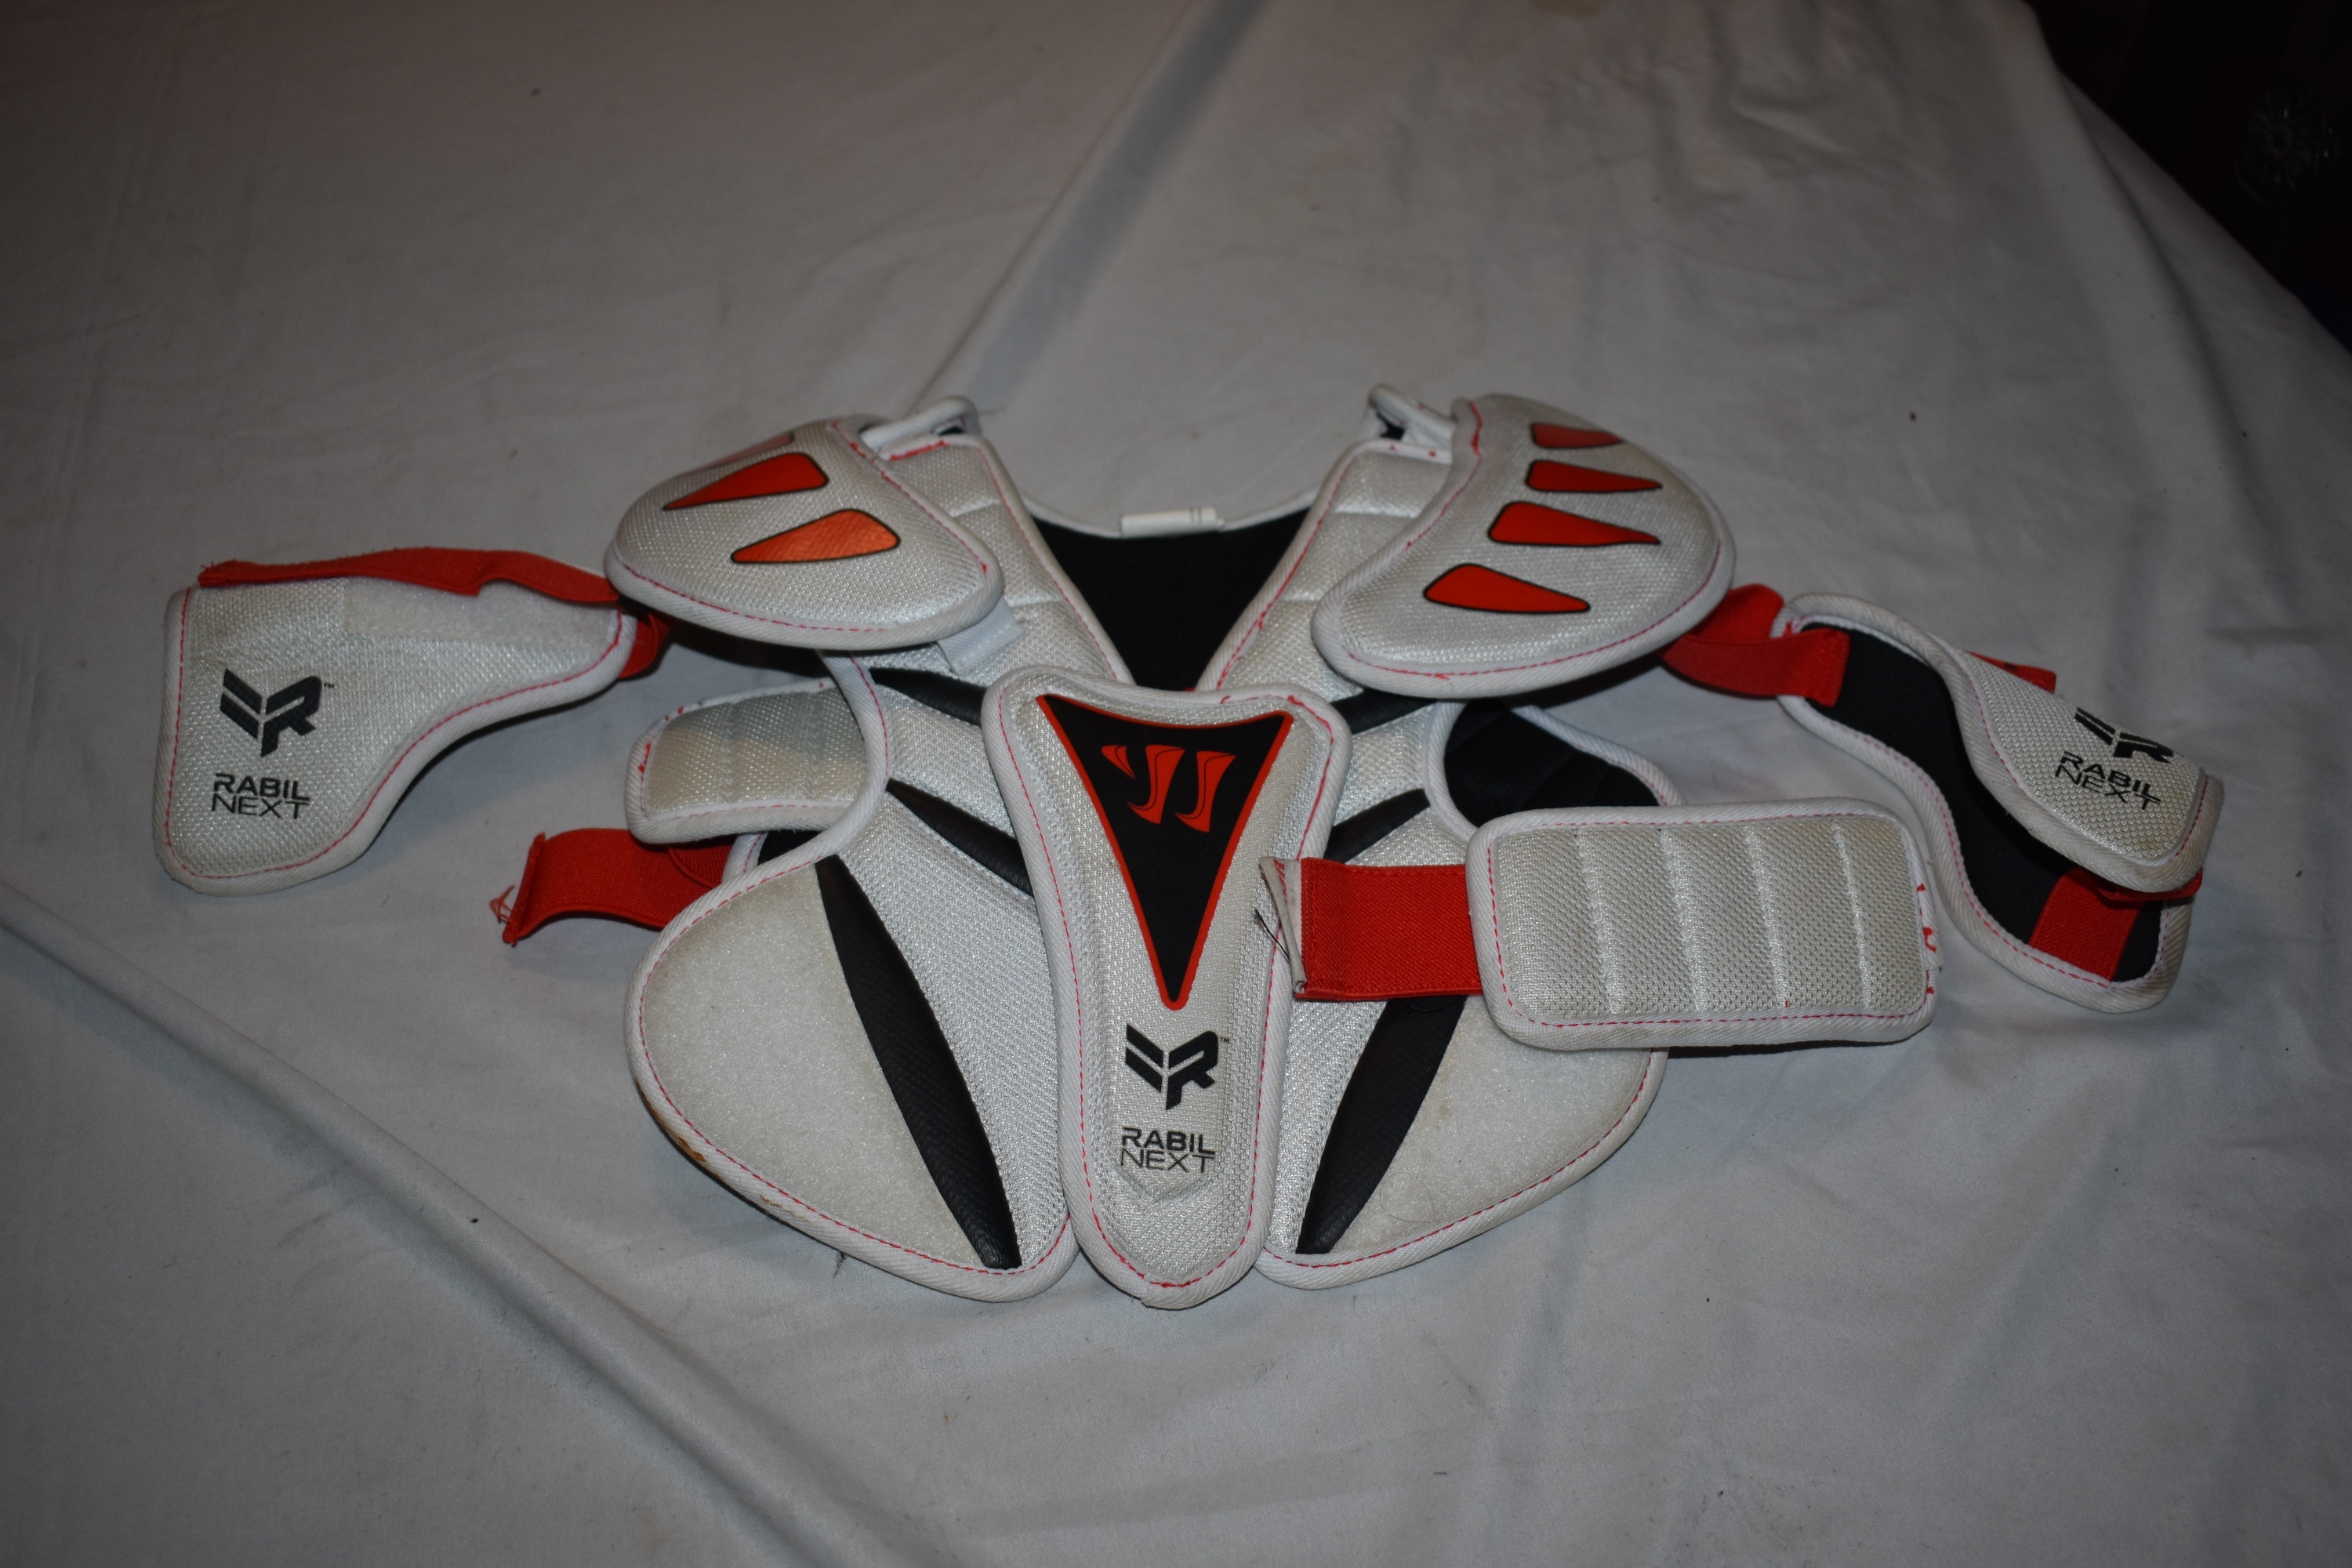 Warrior Rabil Next Lacrosse Shoulder Pads, White/Red/Black, Youth Medium